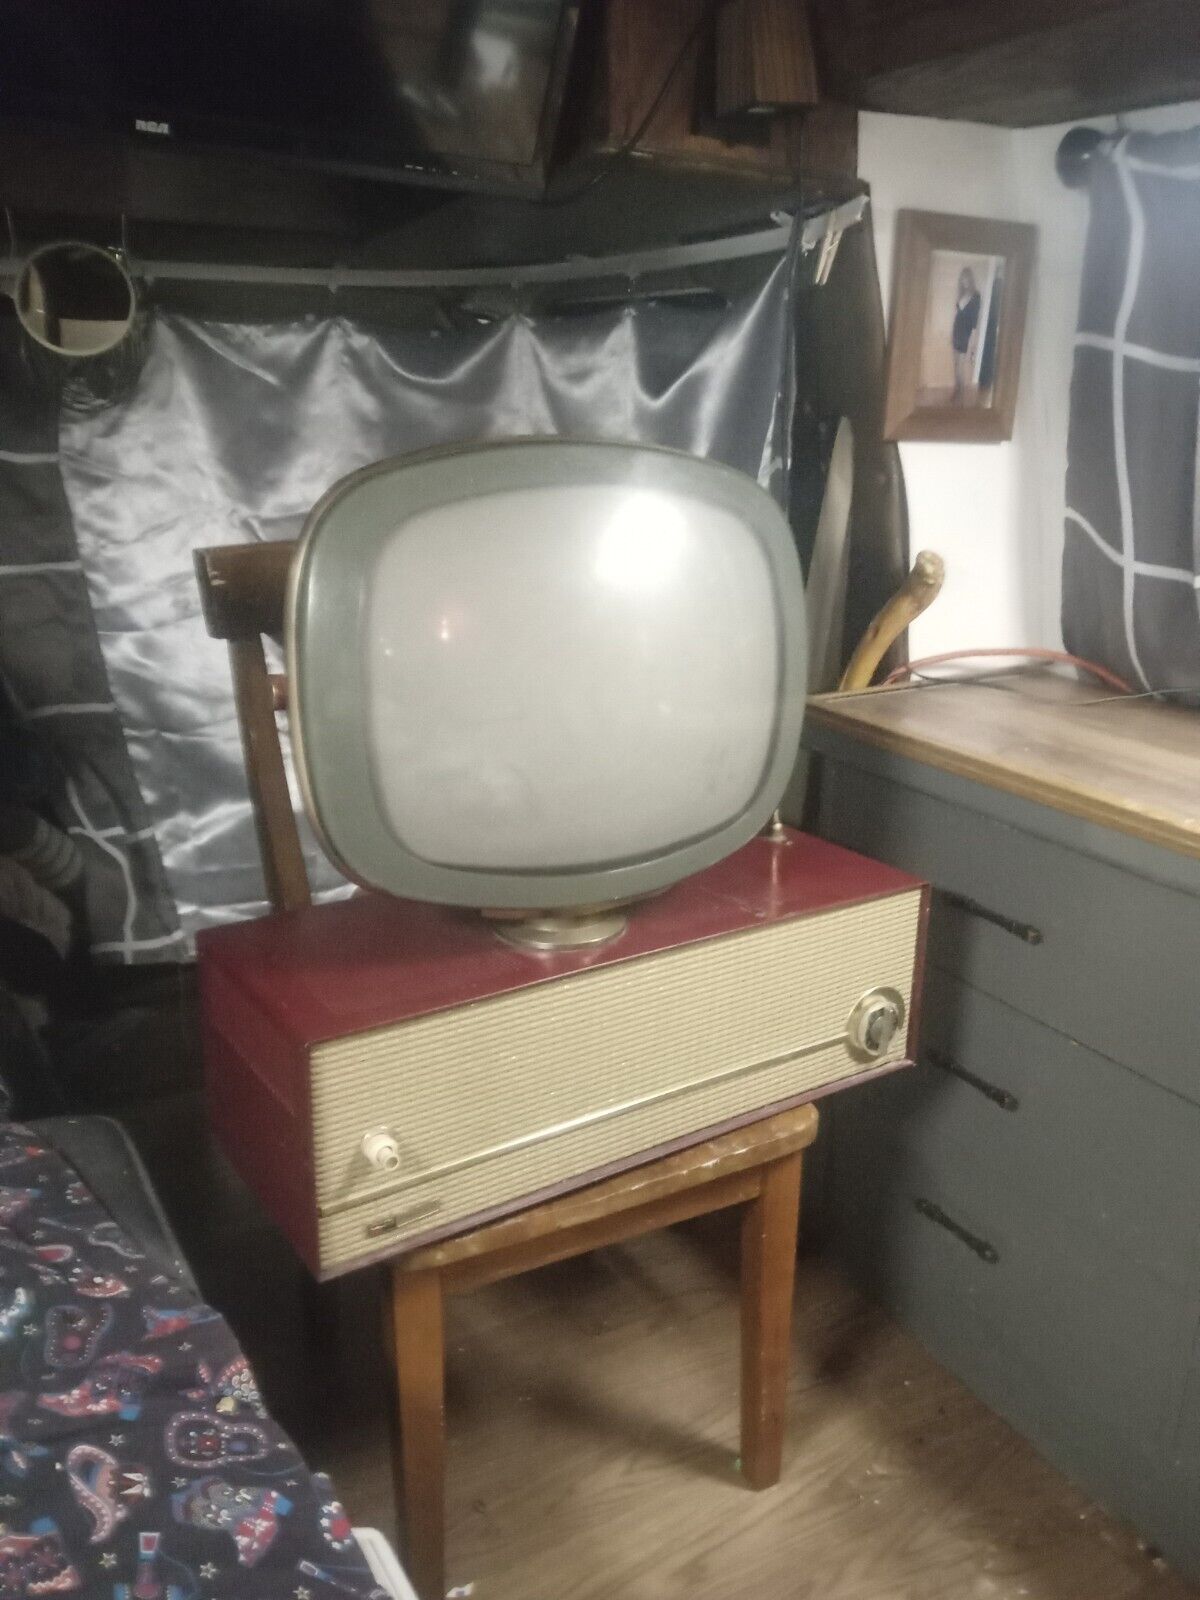 Philco Predicta Mid Century Modern TV Television Vintage Swivel MCM Table Top